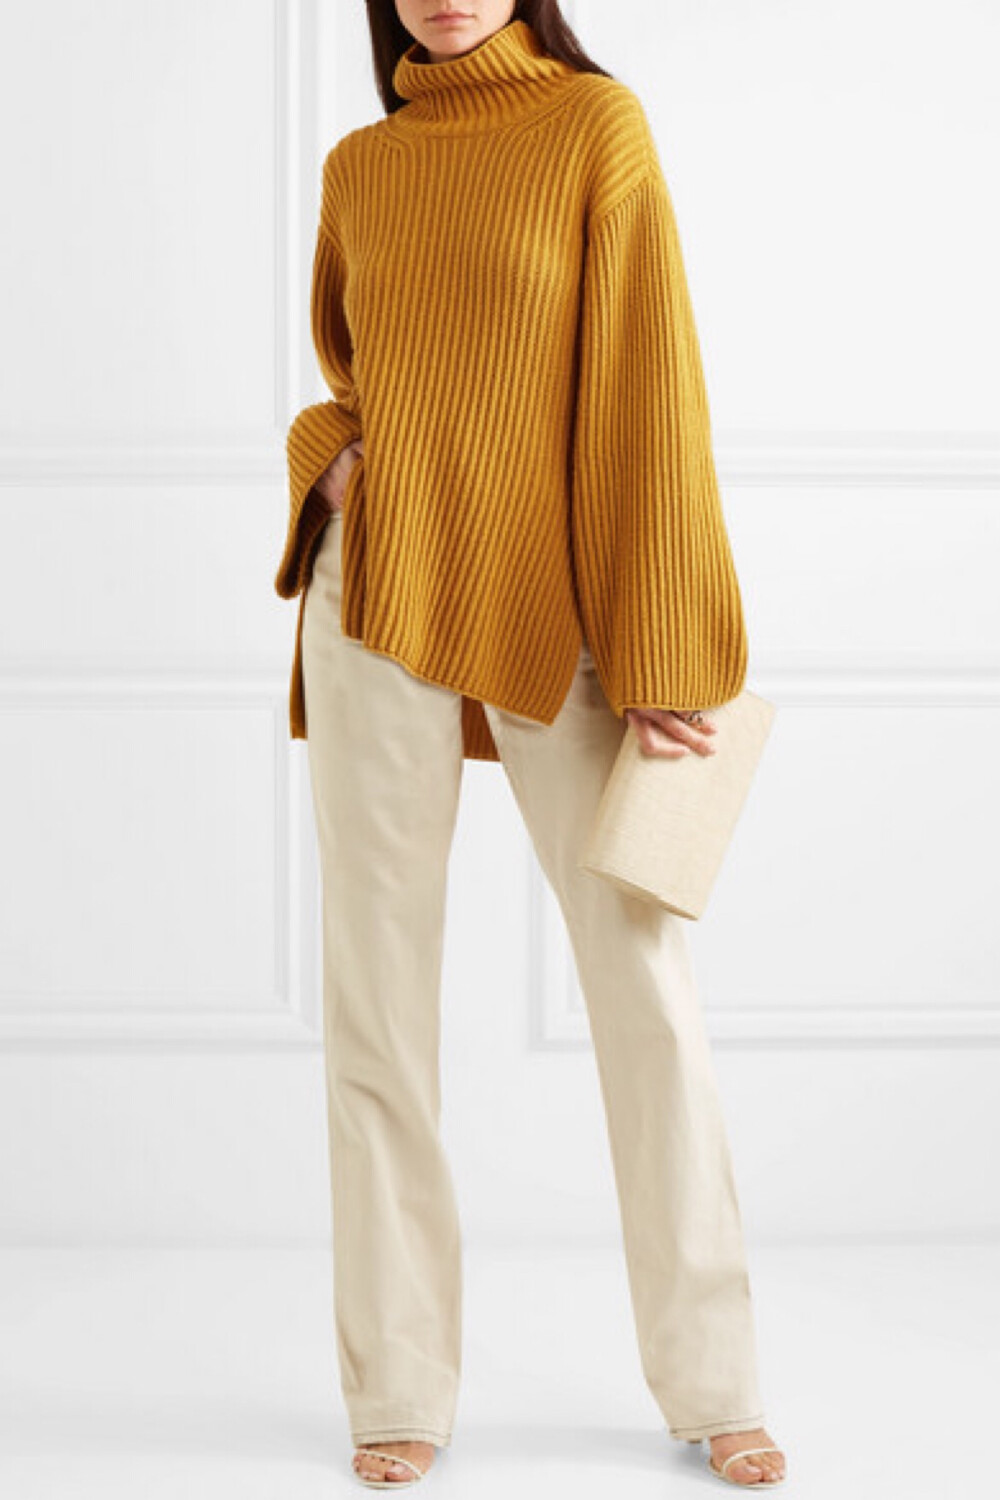 NET-A-PORTER 时尚市场编辑 Libby Page 称 ARJÉ 的夫妻档创始人 Oliver 和 Bessie Afnaim Corral 为中性色风潮的引领者。这款厚实的粗织毛衣以羊毛、真丝与羊绒混纺面料织成，呈现浓郁的金橘色，侧边的开衩和宽大慵懒的衣袖令大廓形的它更显宽广。不妨跟上潮流，与同色系下装一同打造秋冬时尚，搭配牛仔裤亦佳。